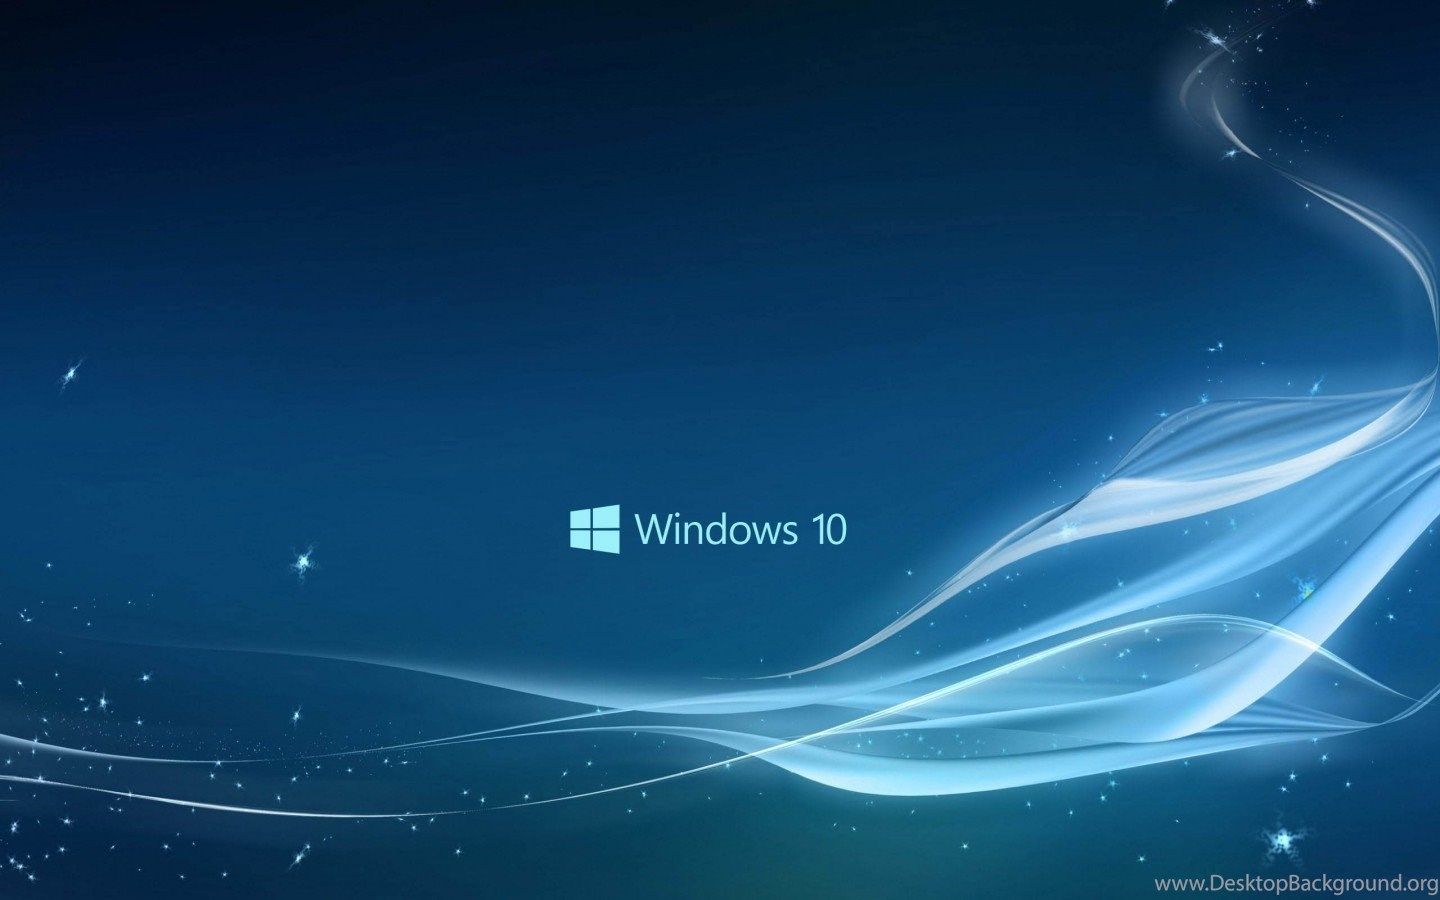 Windows 10 HD Wallpaper 2015 1440x900 Wallpaper Wallpaper Style Desktop Background